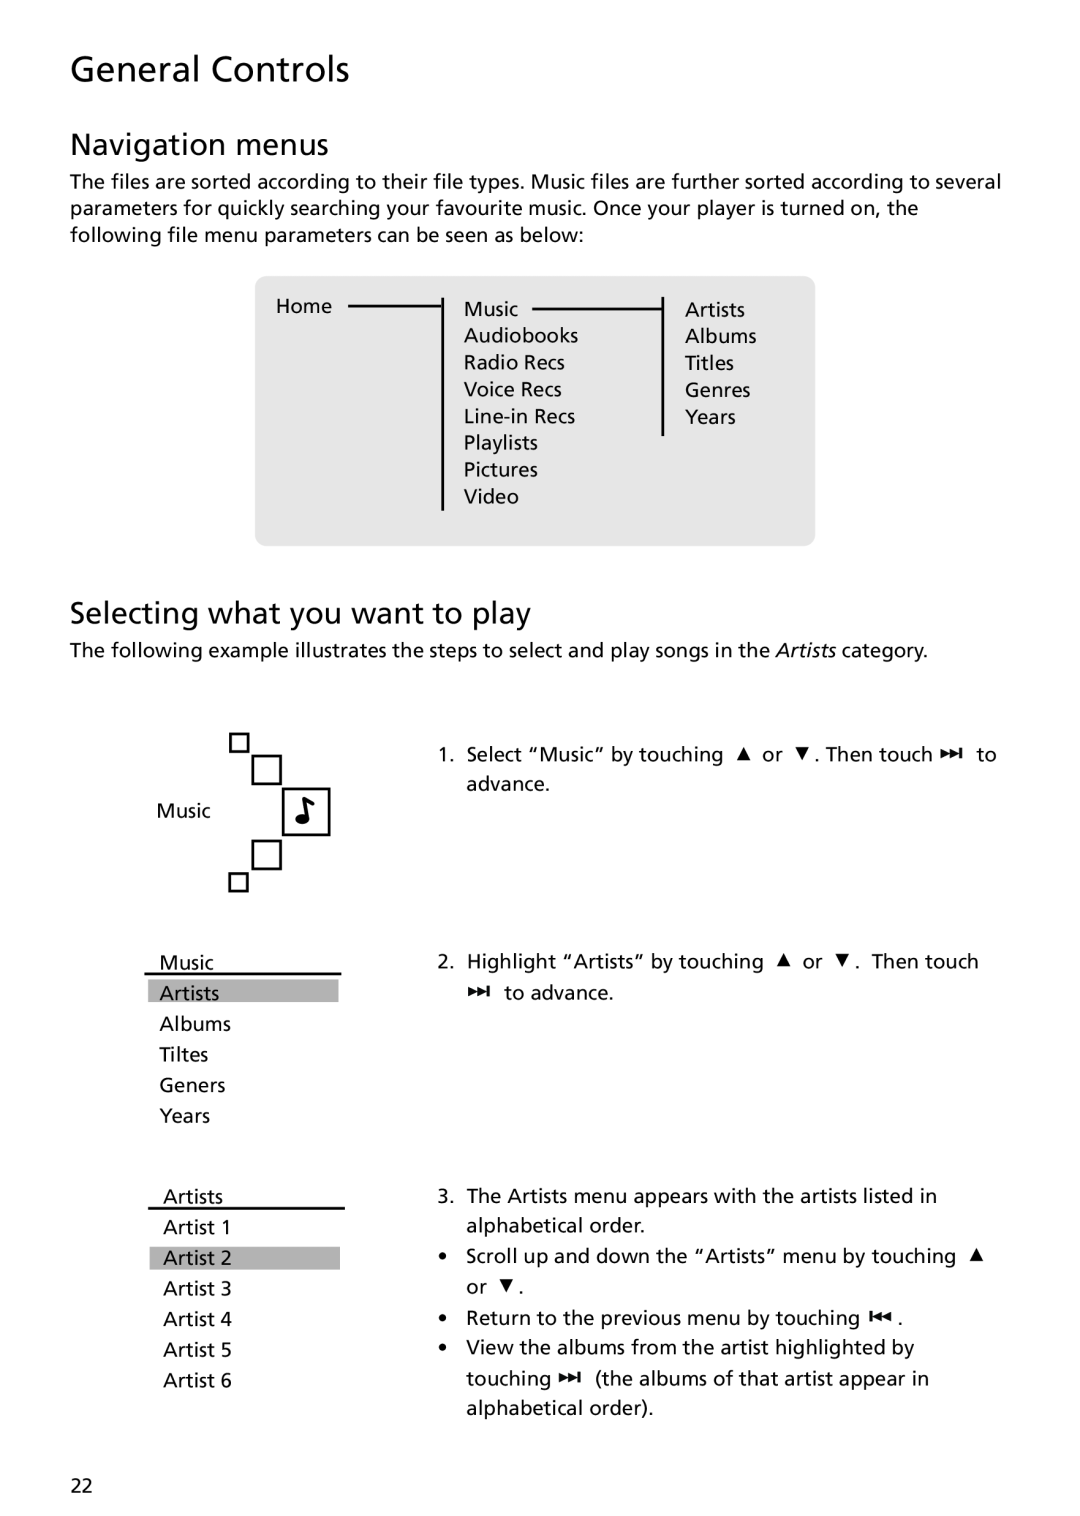 RCA MC5104 user manual Navigation menus, Selecting what you want to play, General Controls 